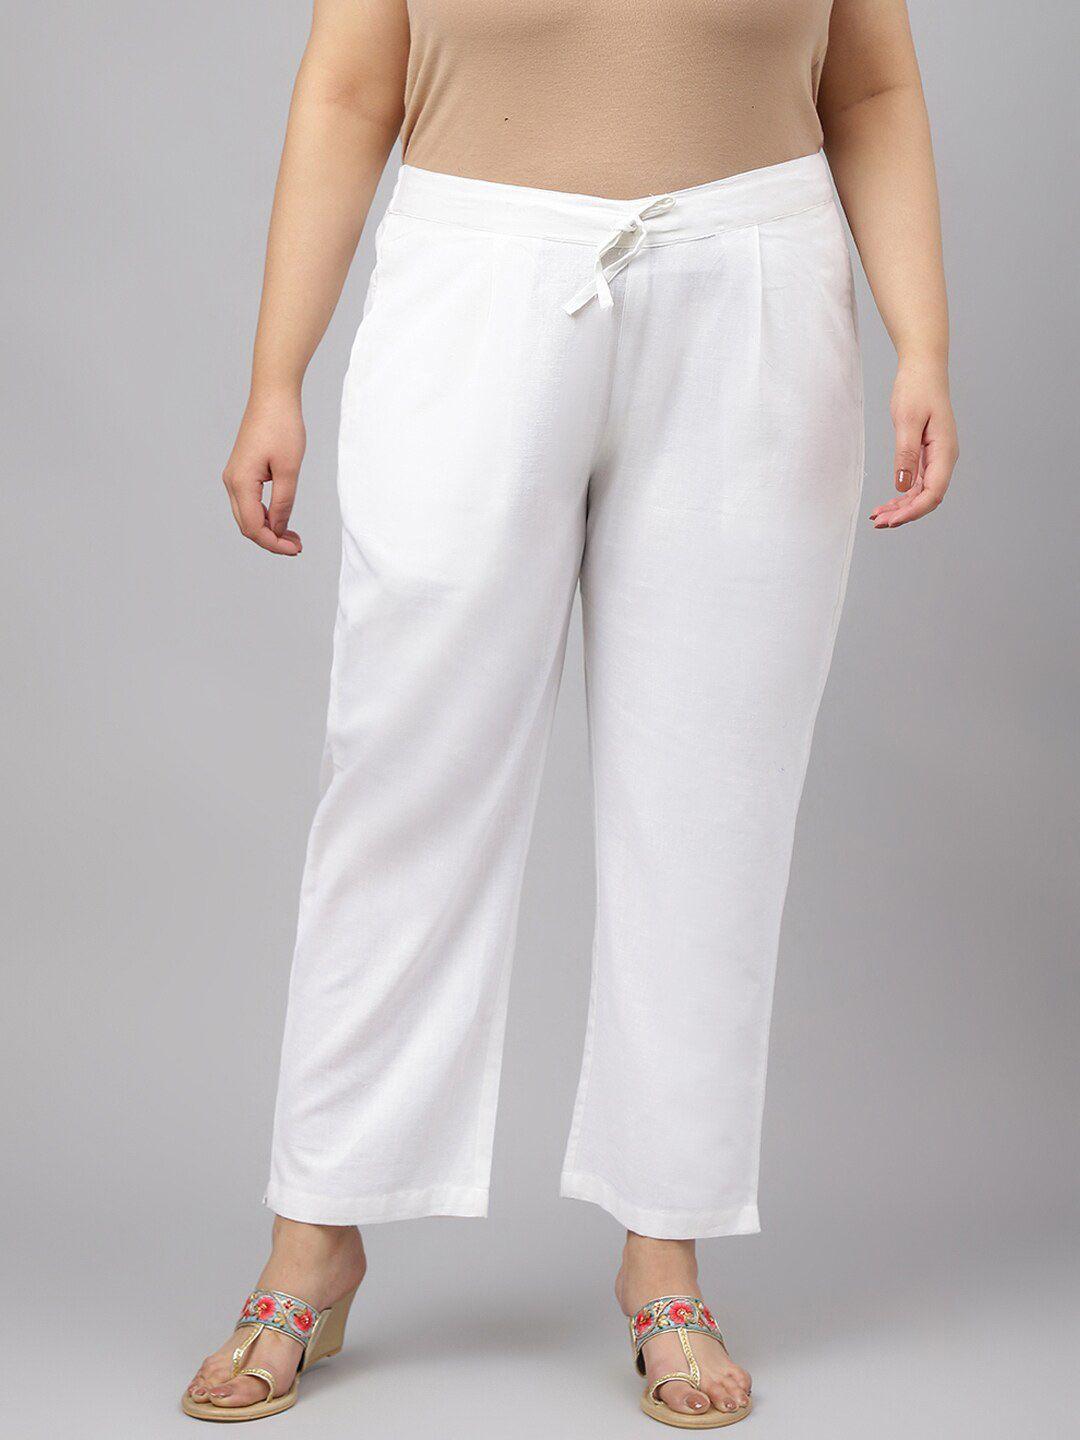 jaipur attire women plus size relaxed fit cotton regular trousers